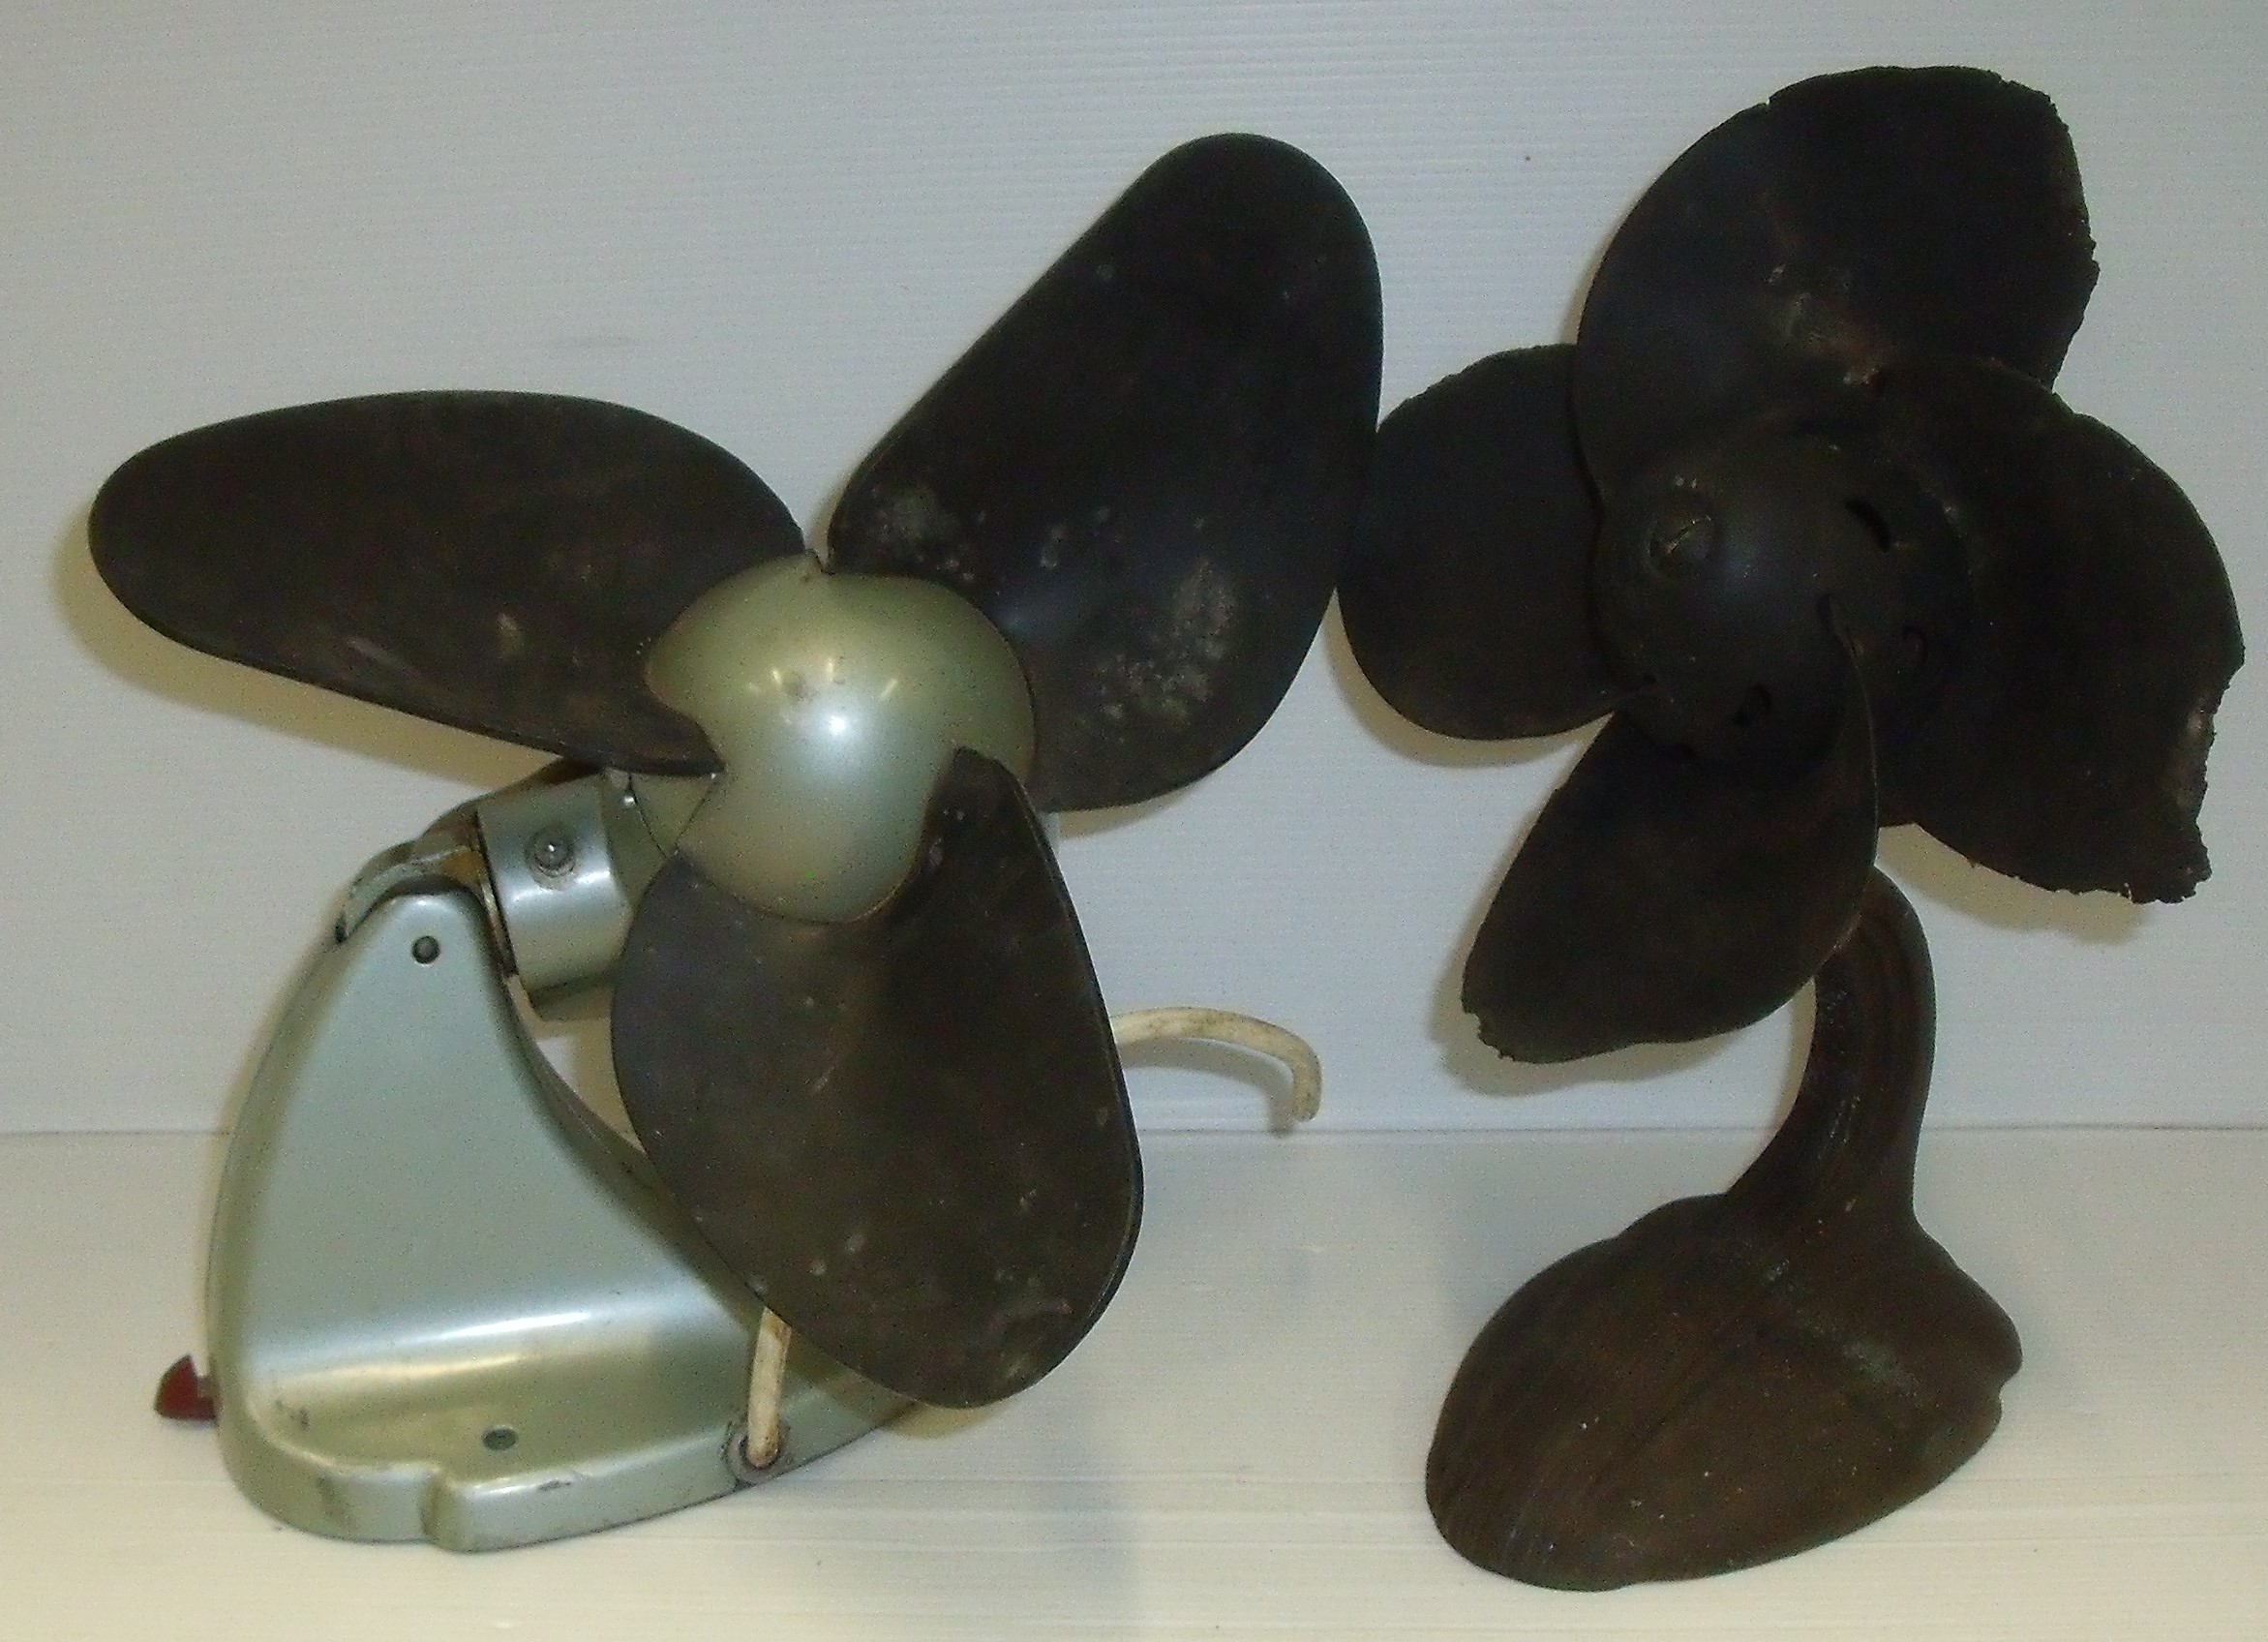 GEC 12 inch electric desk fan and one other similar cast metal fan